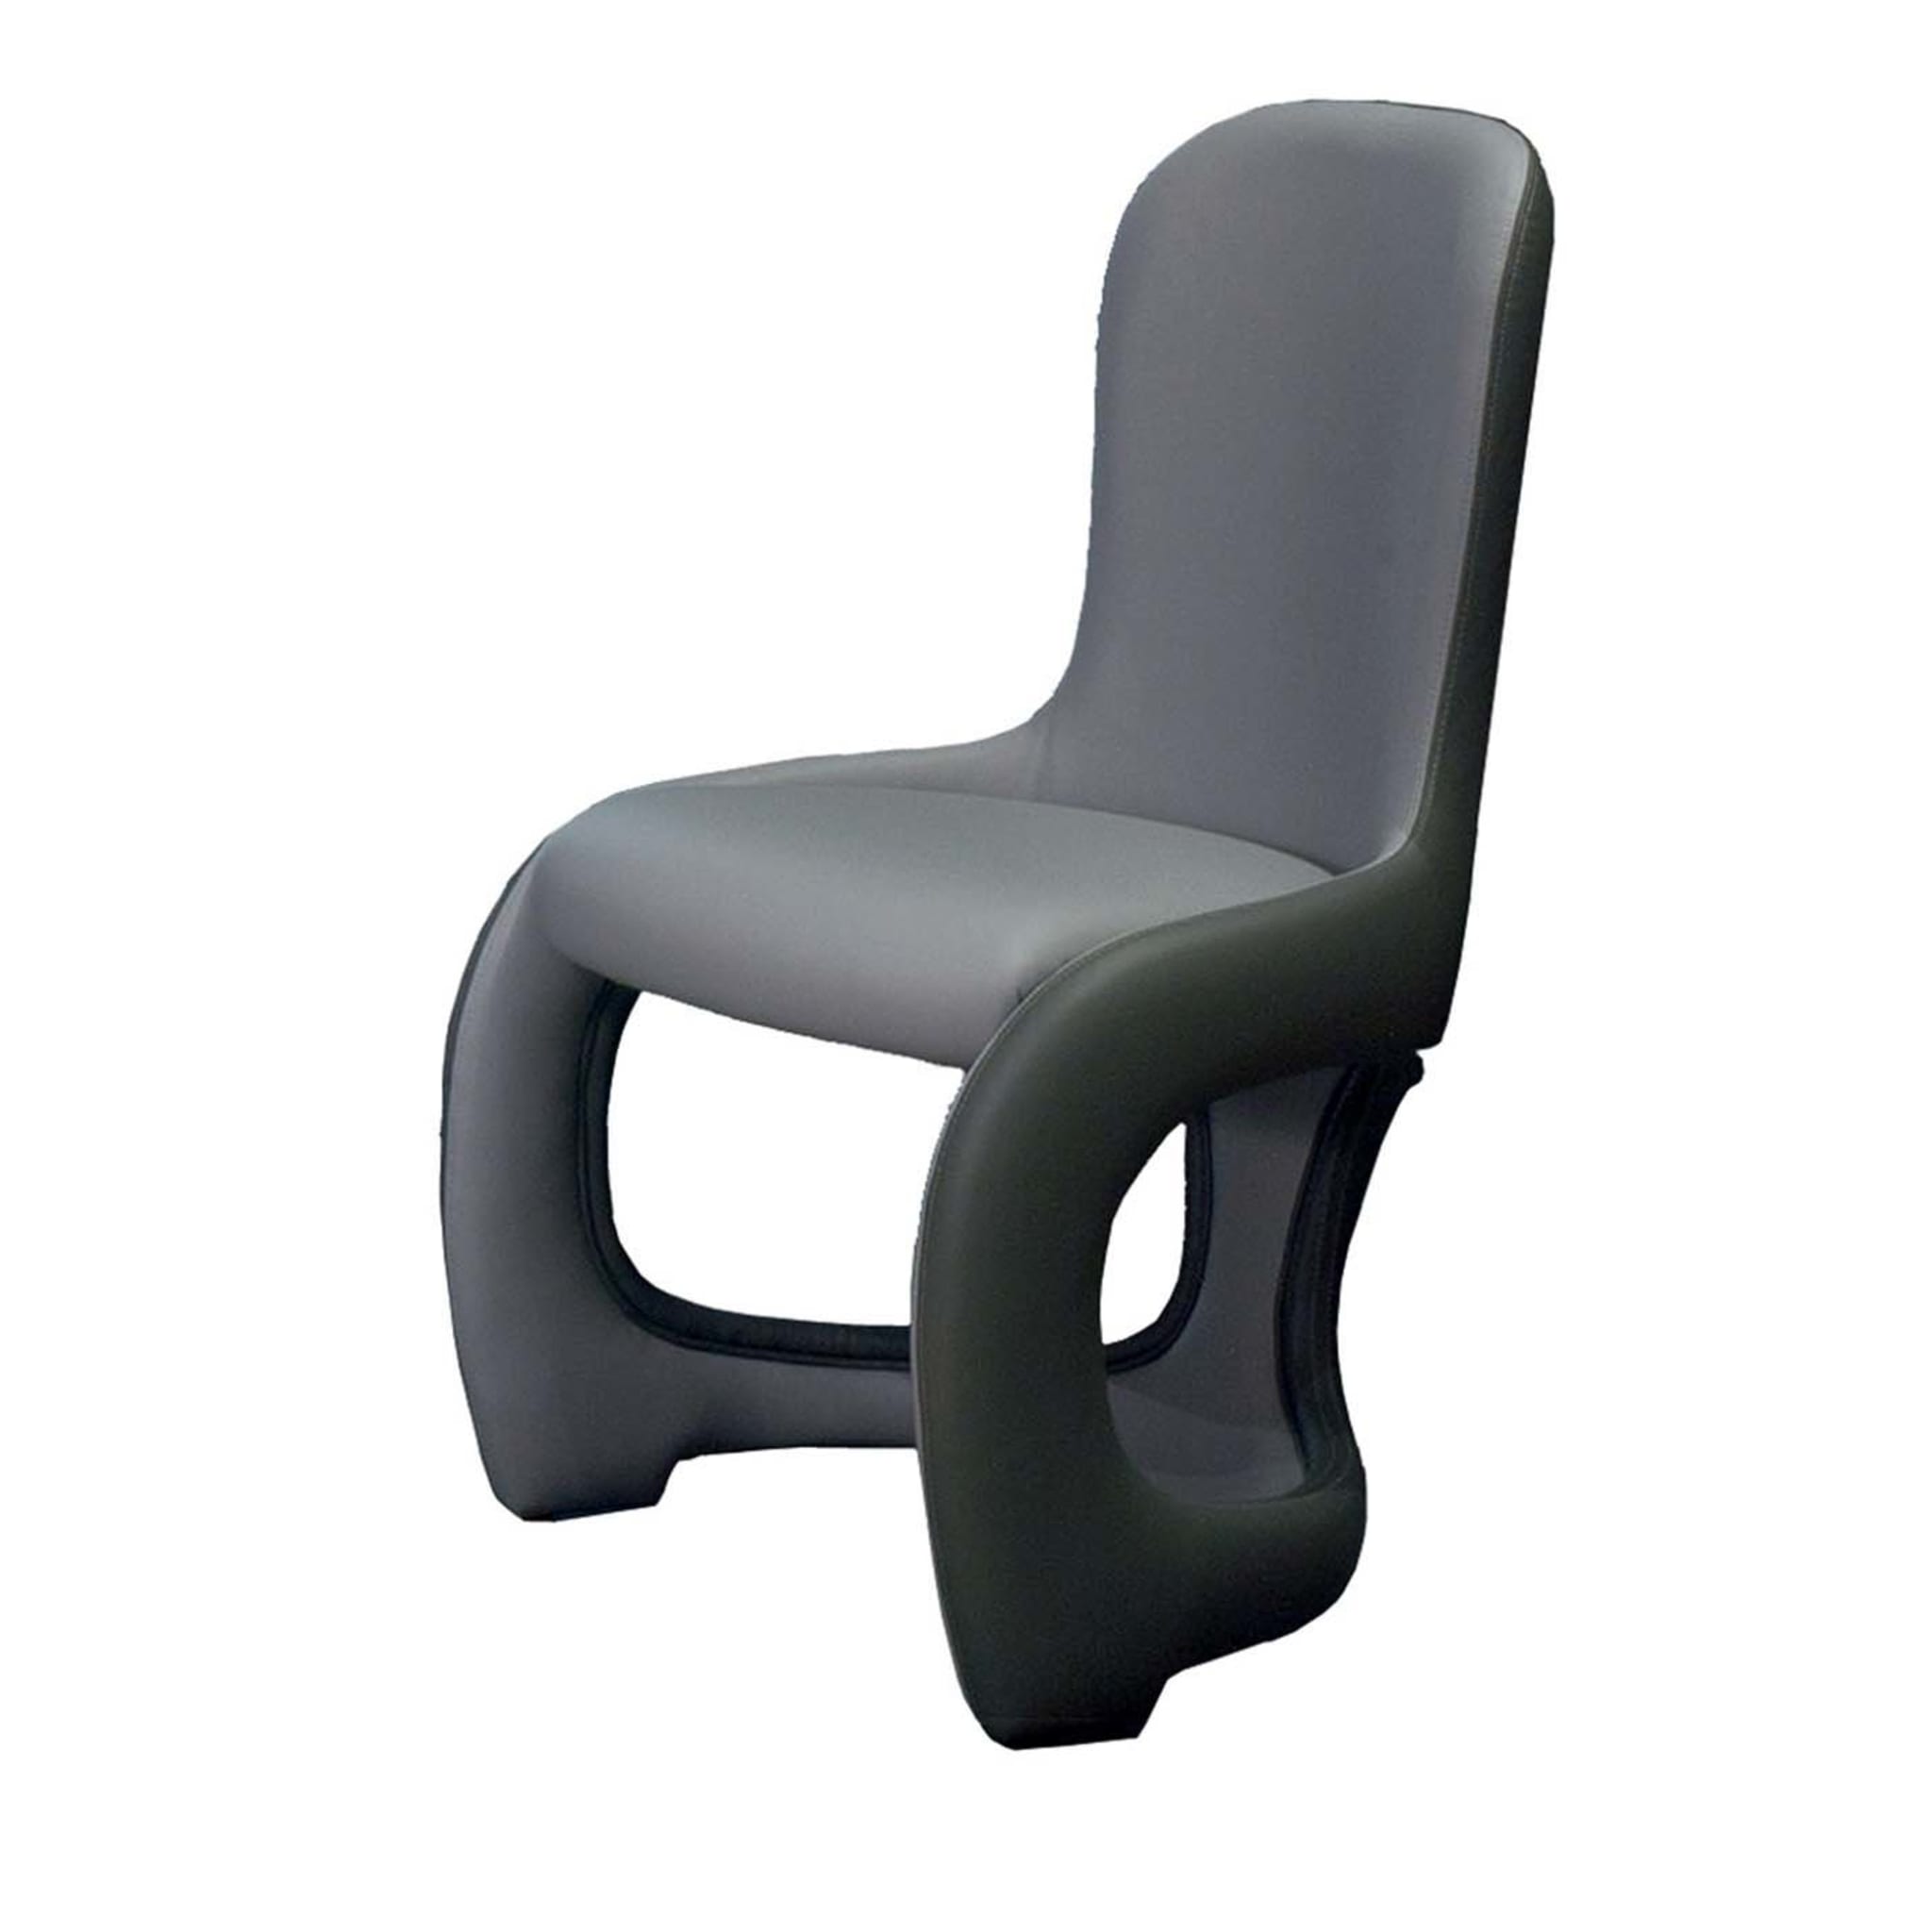 Venere Gray Padded Chair - Main view